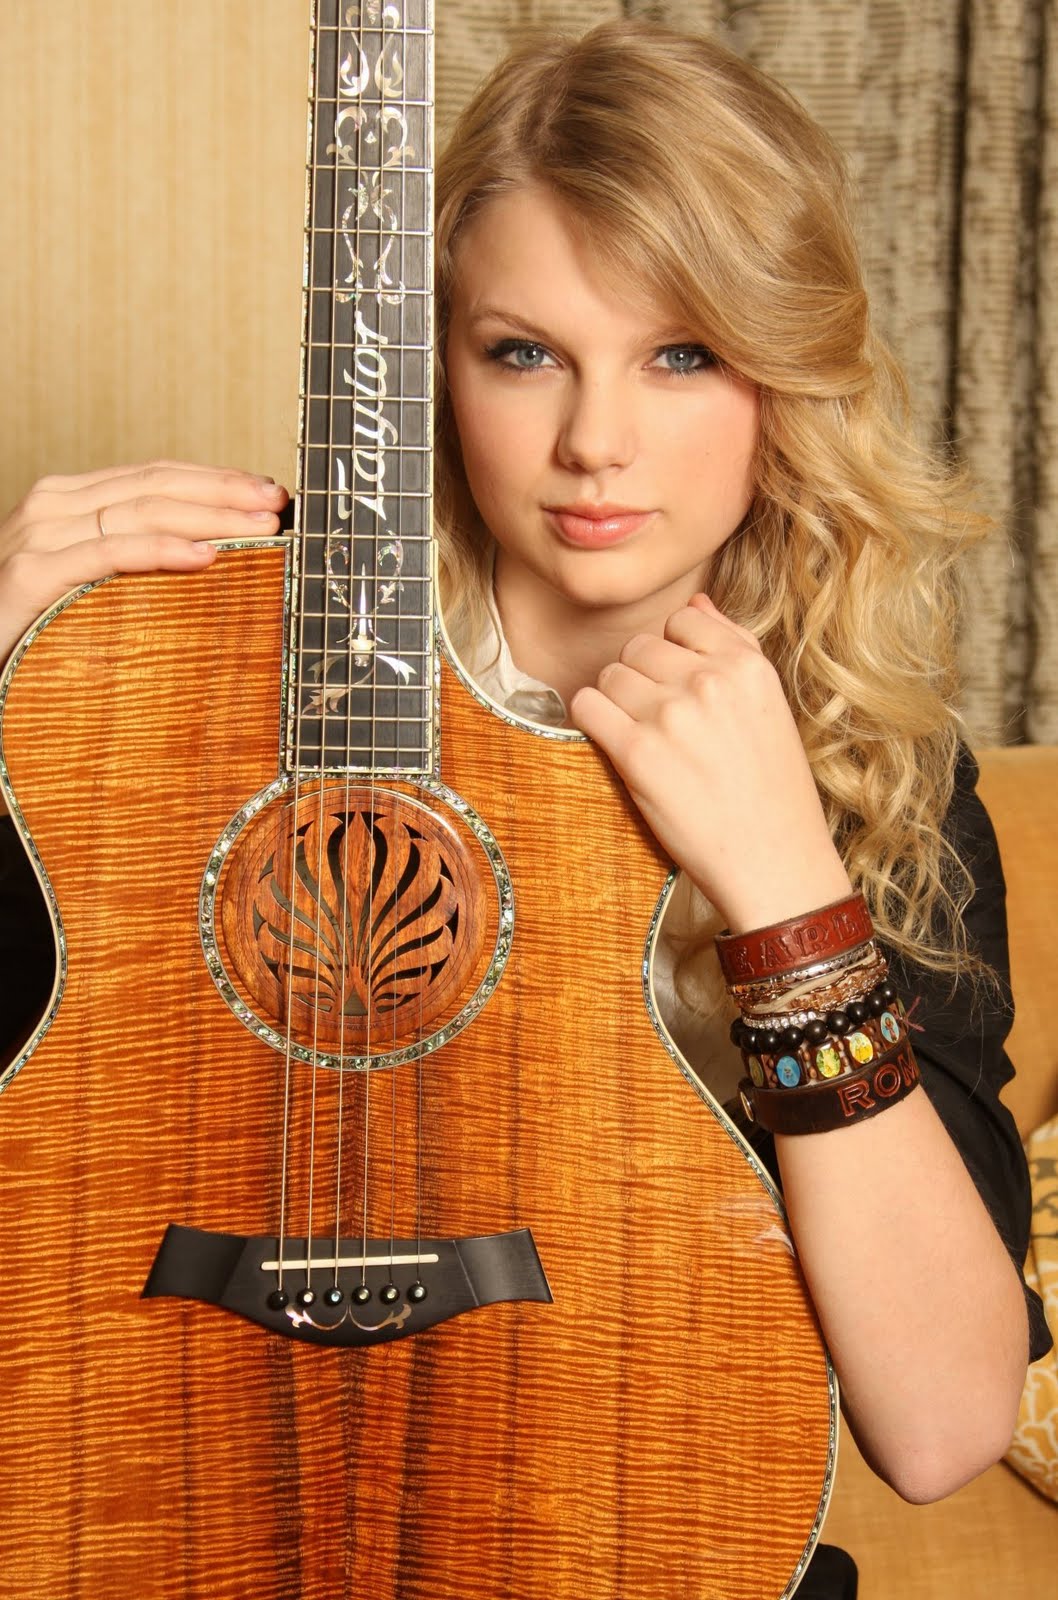 http://3.bp.blogspot.com/-zU9Wg5VqJj0/USx4mgAdWII/AAAAAAAAEIo/yiWmhJ4VRzI/s1600/Taylor+Swift+With+Guitar.jpg